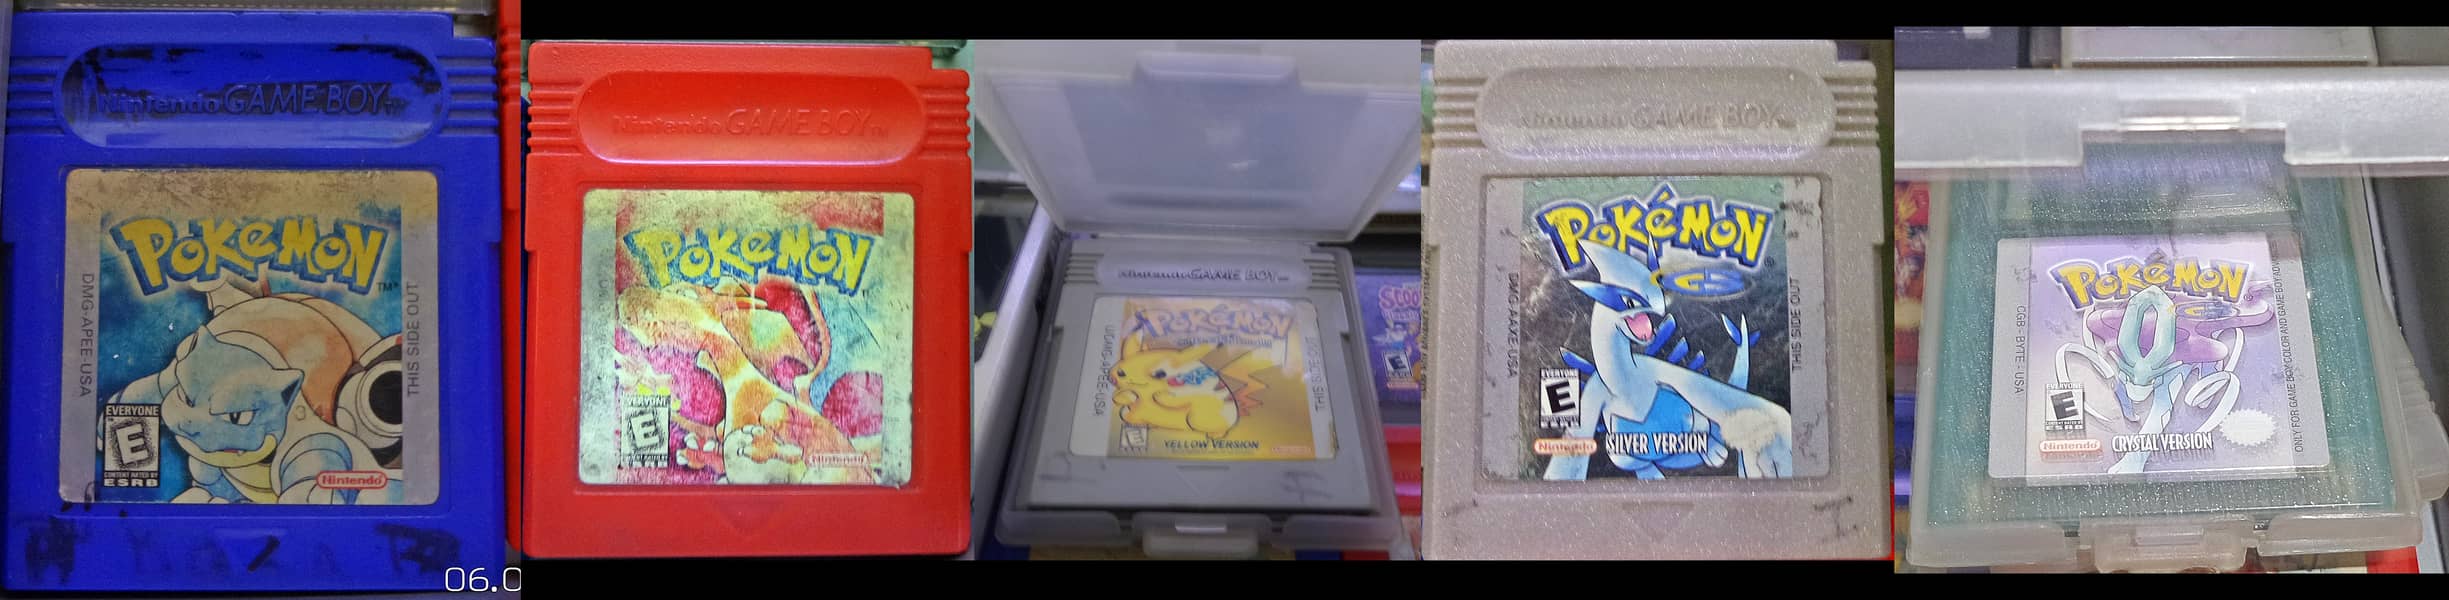 Nintendo Game Boy / Pokemon collection. 1